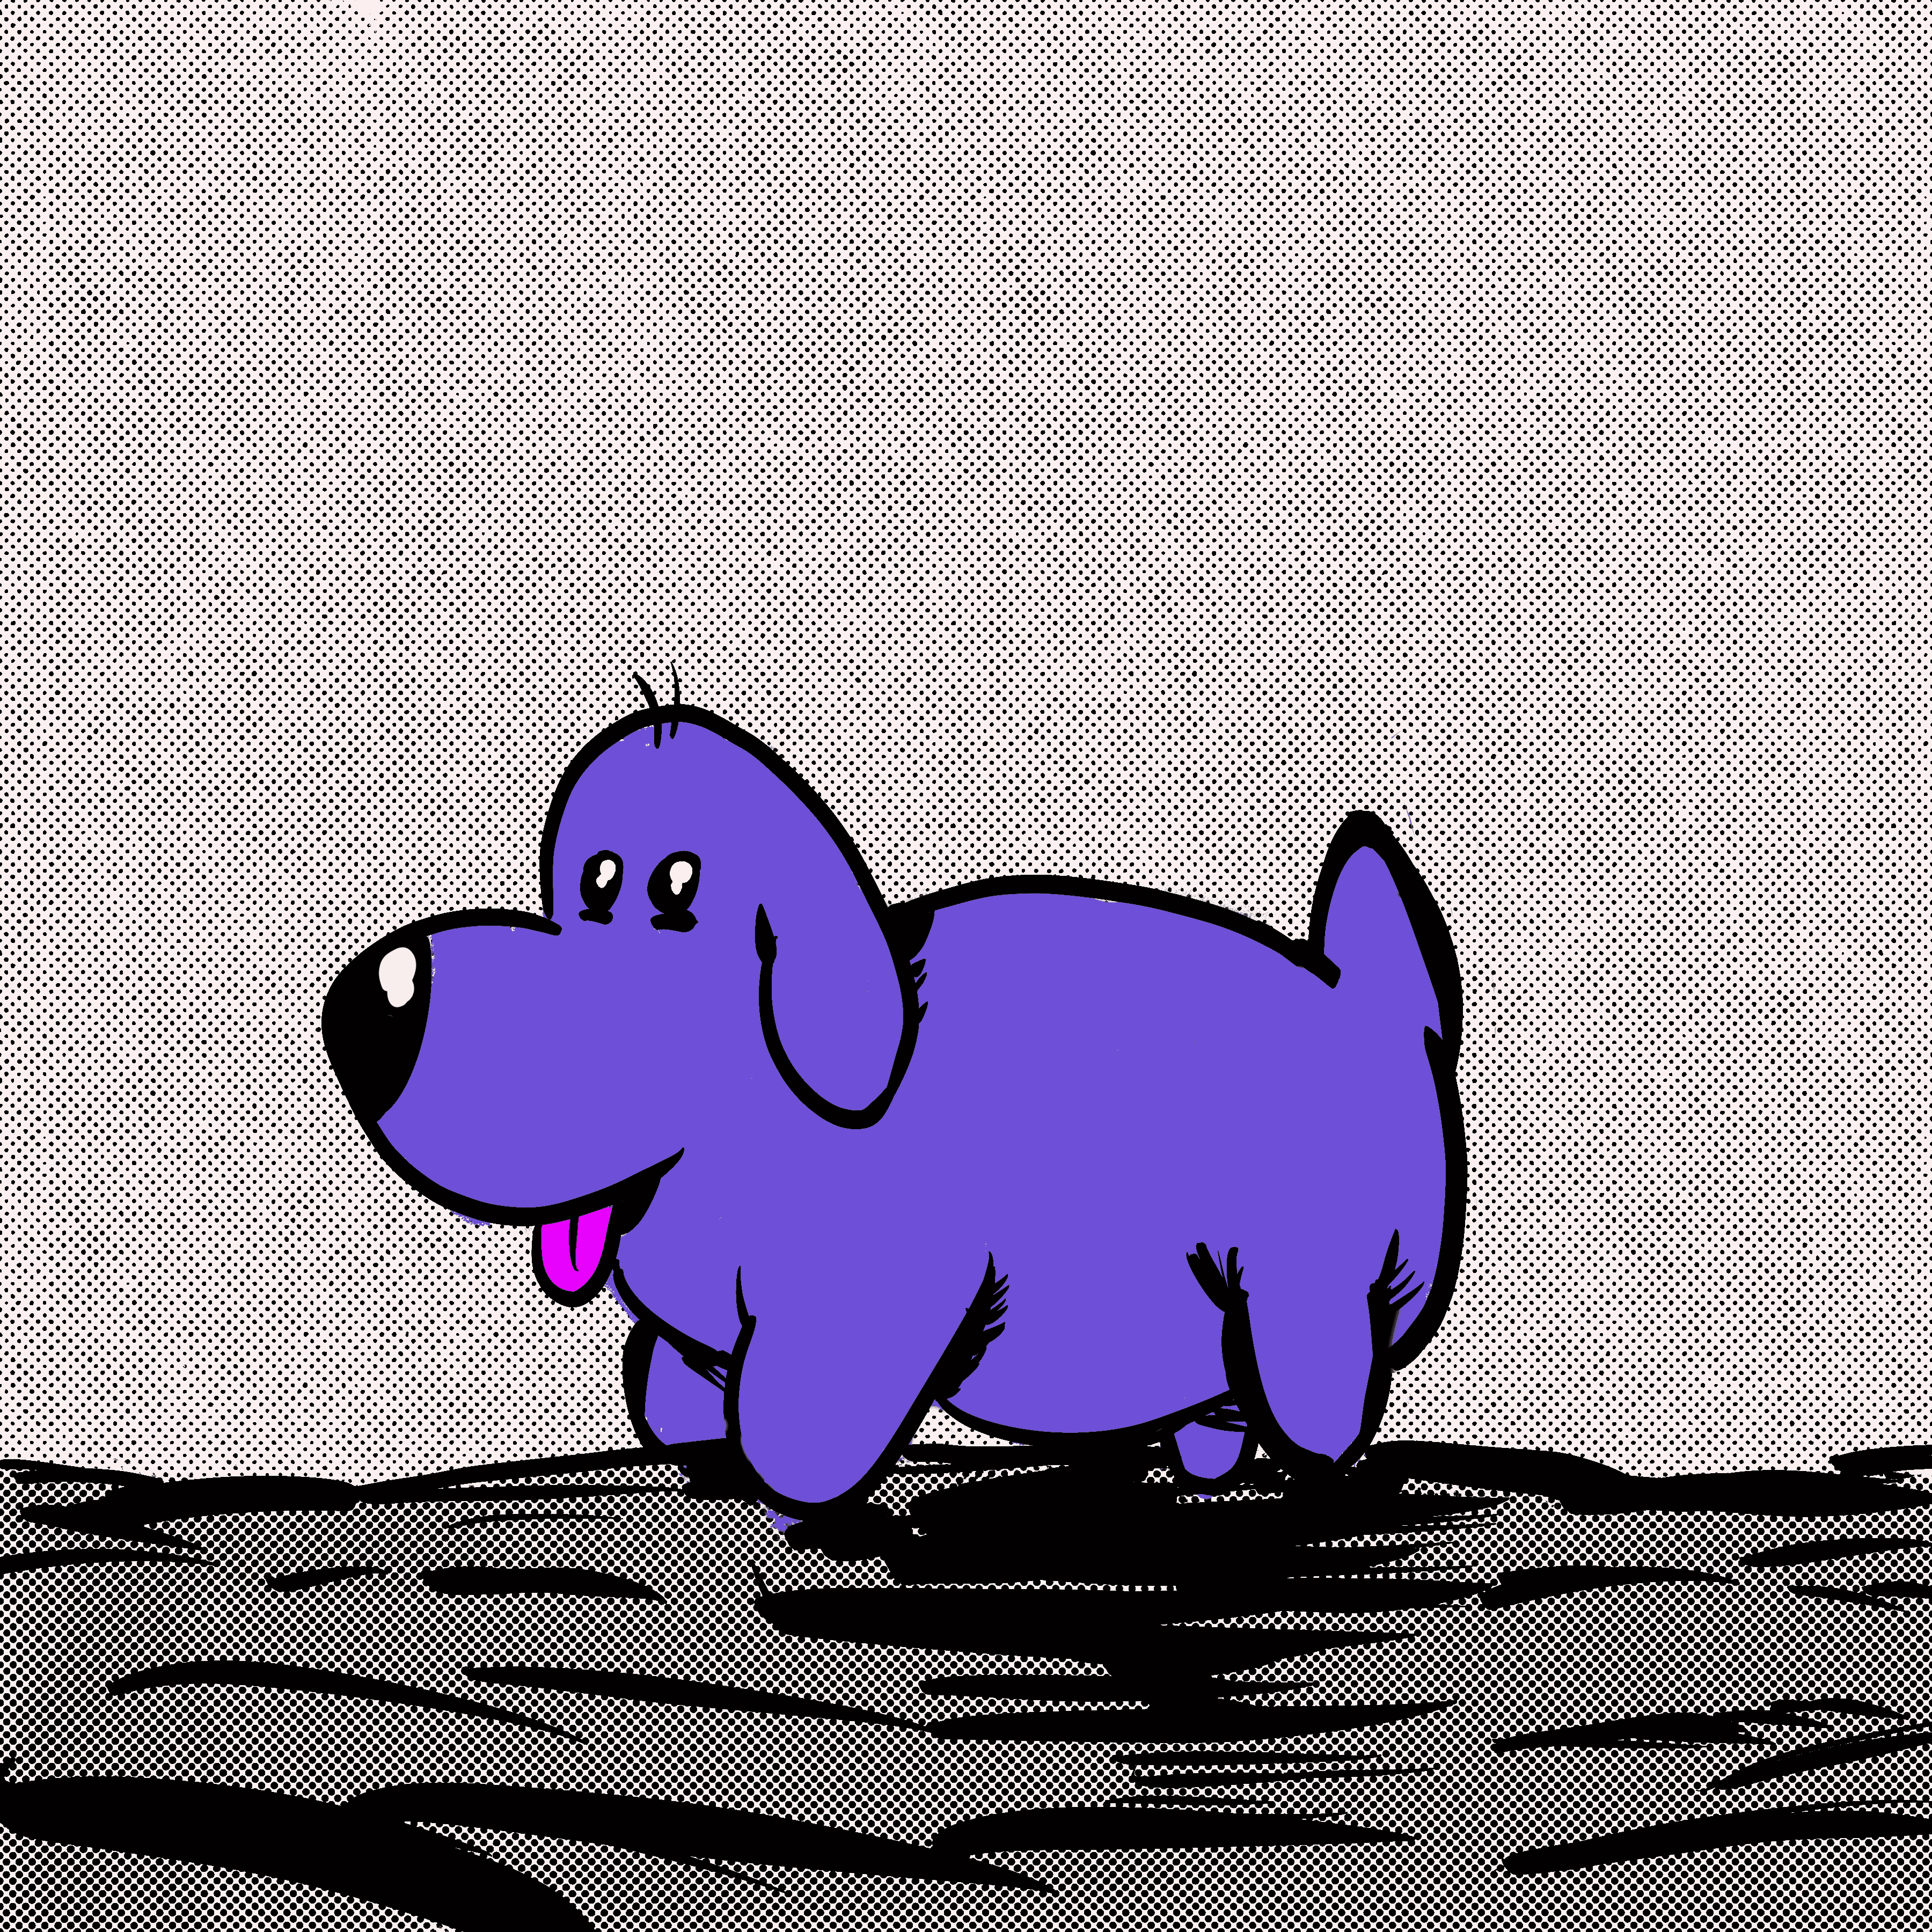 Spacetime Dog #2: Mr. Purple